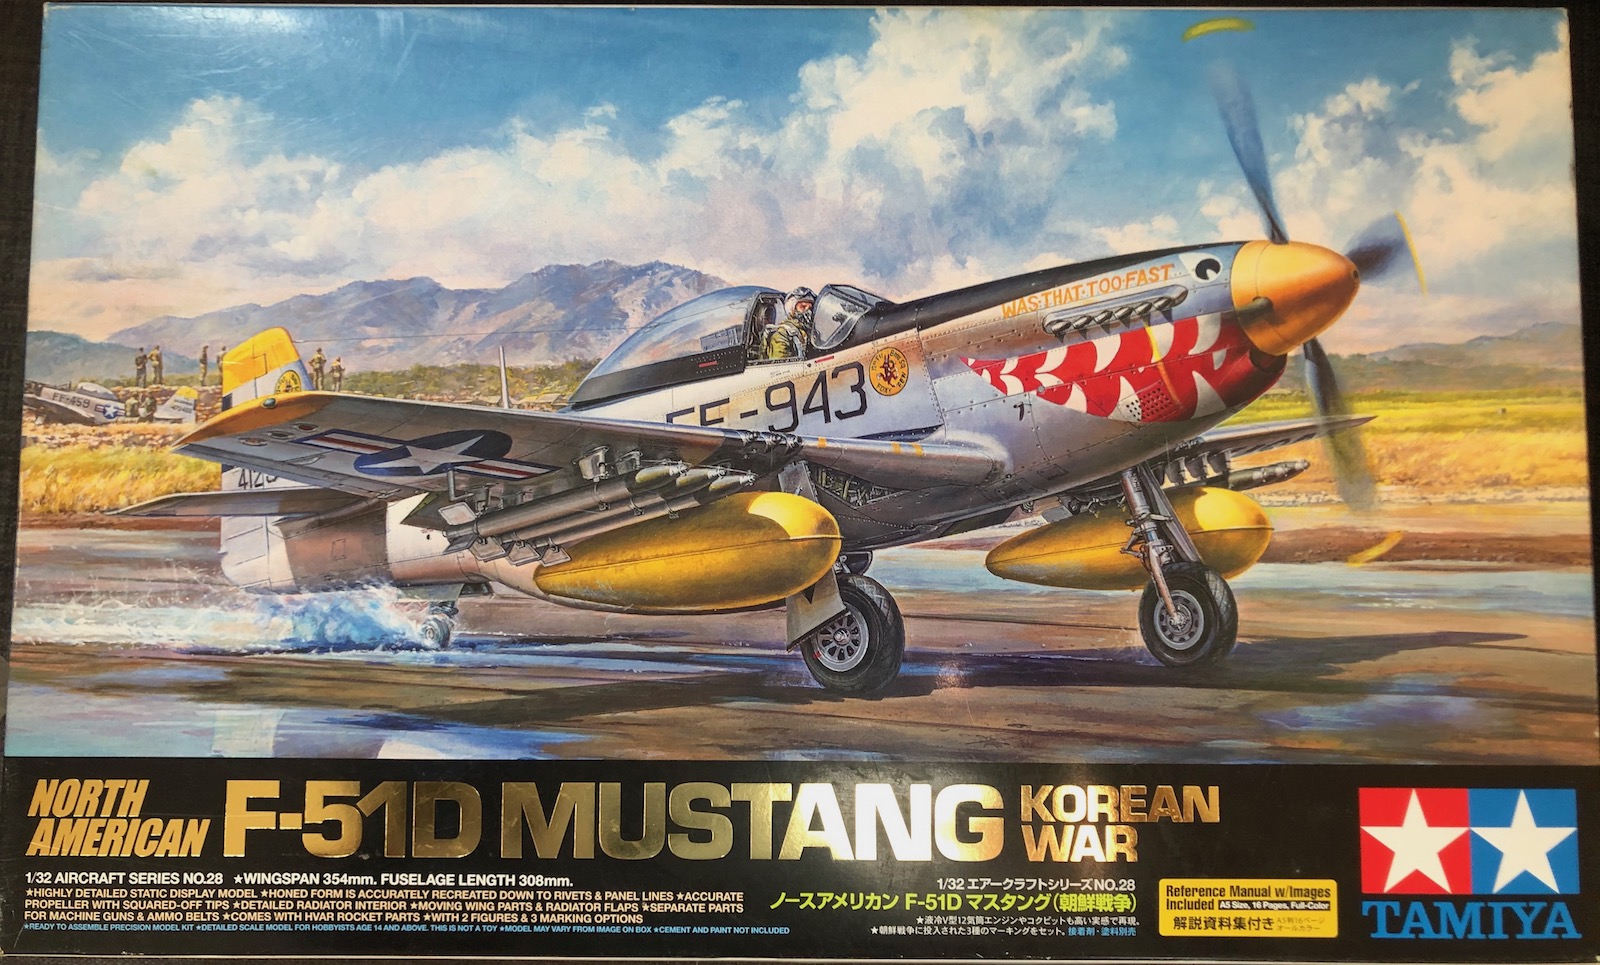 North American F-51D Mustang Korean War | IPMS/USA Reviews